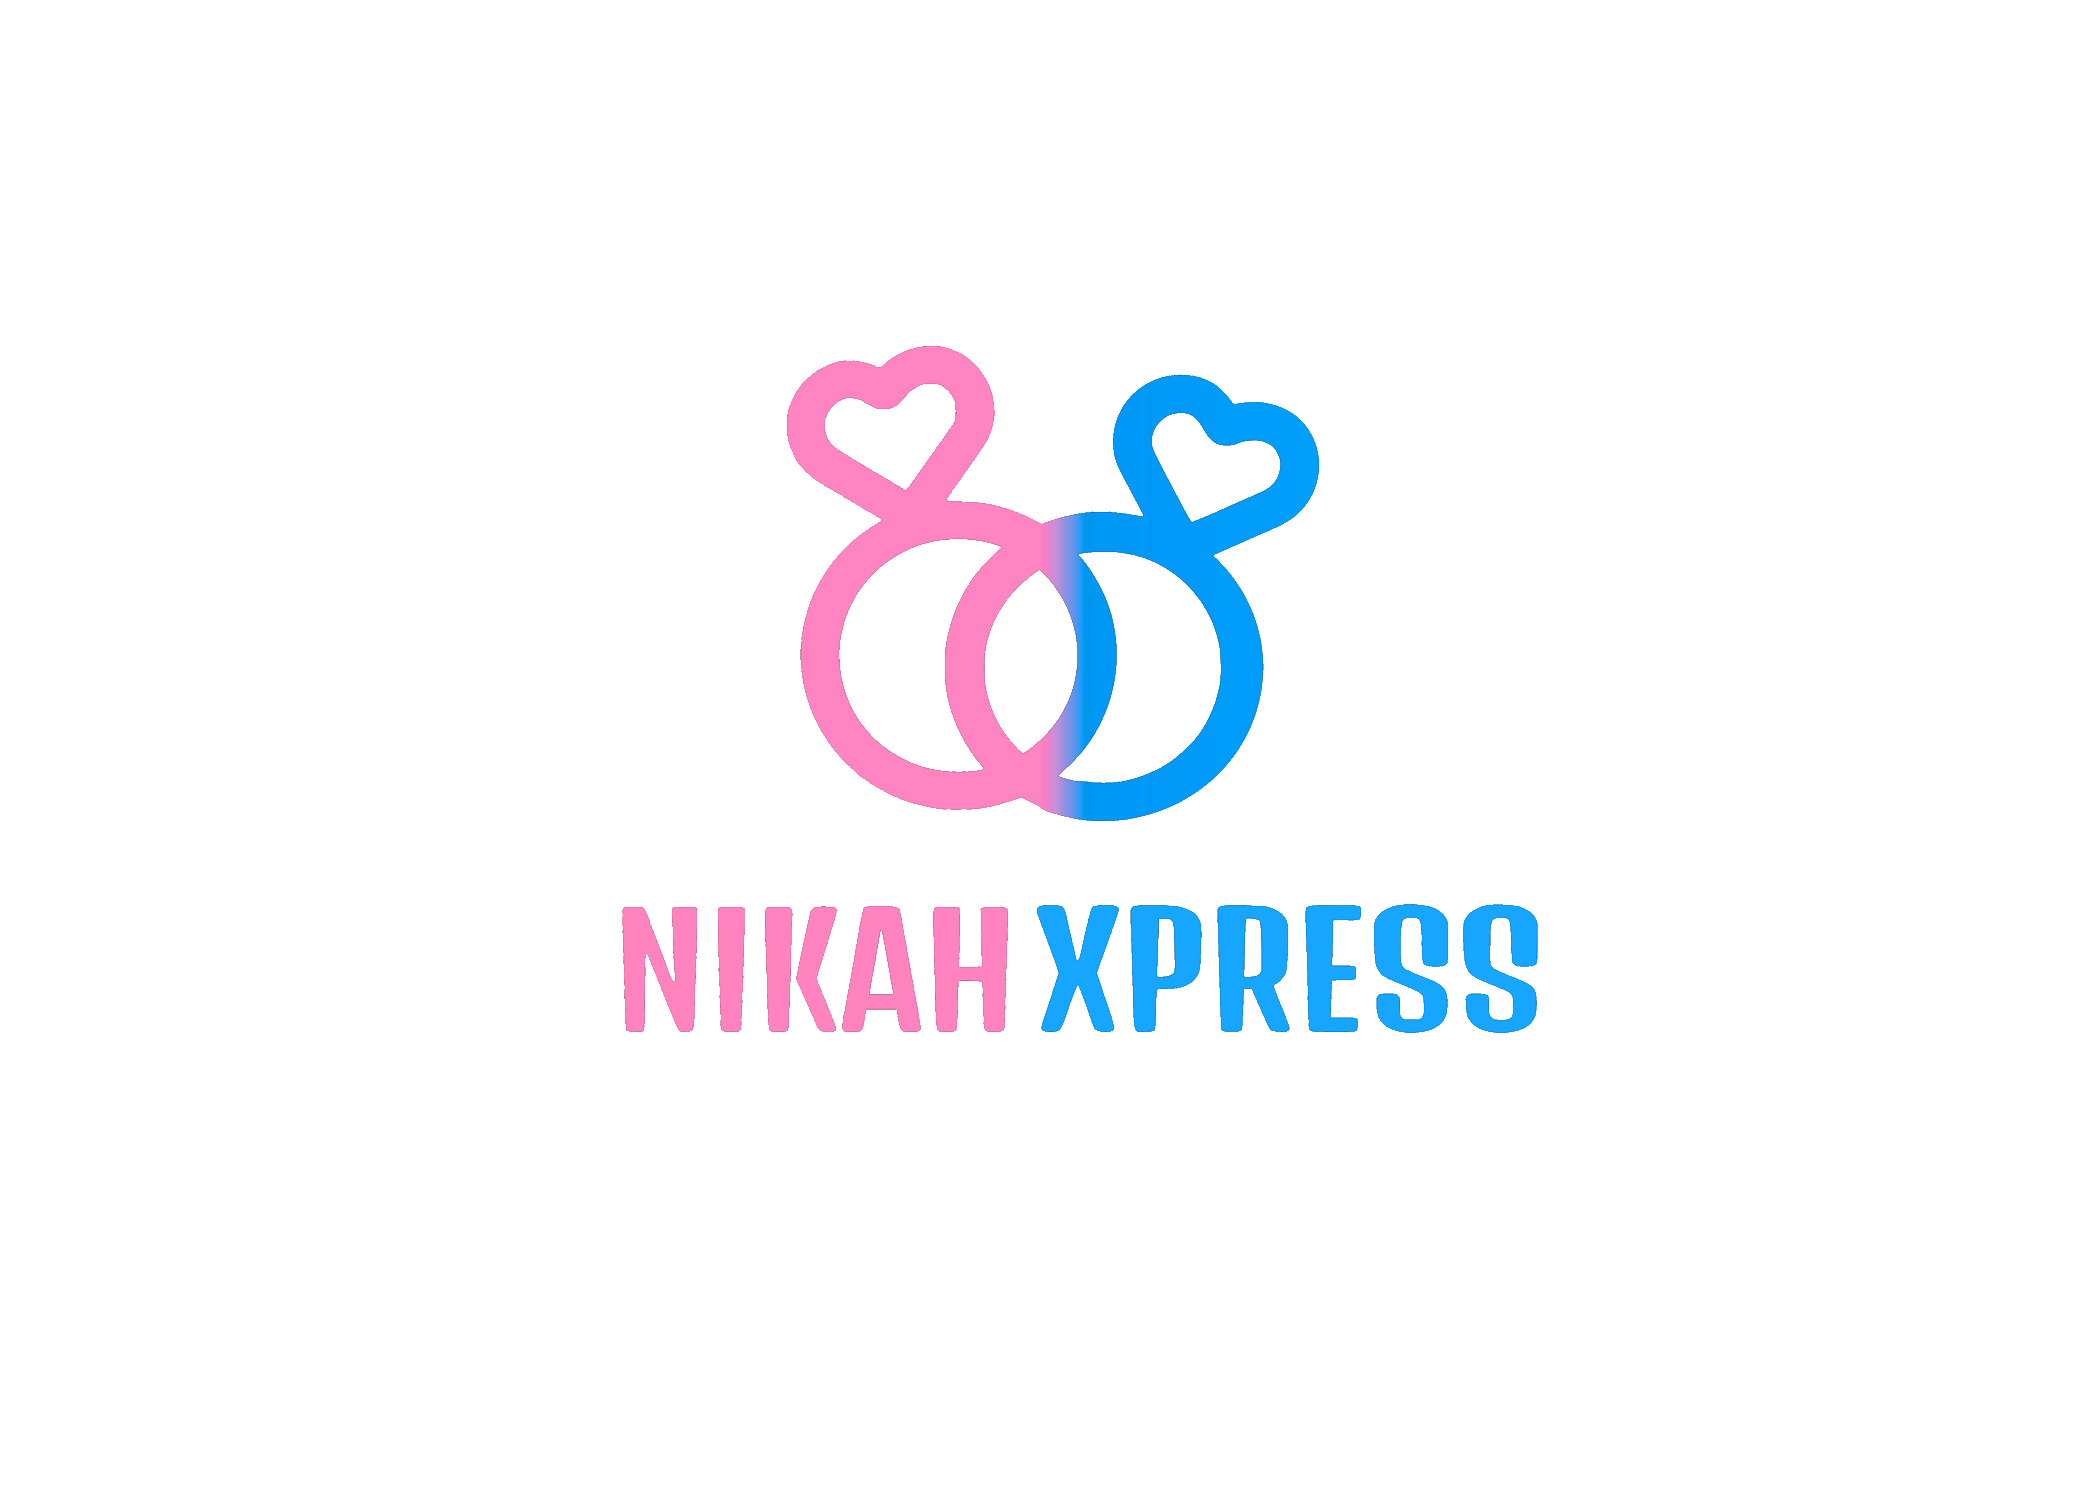 NikahXpress logo